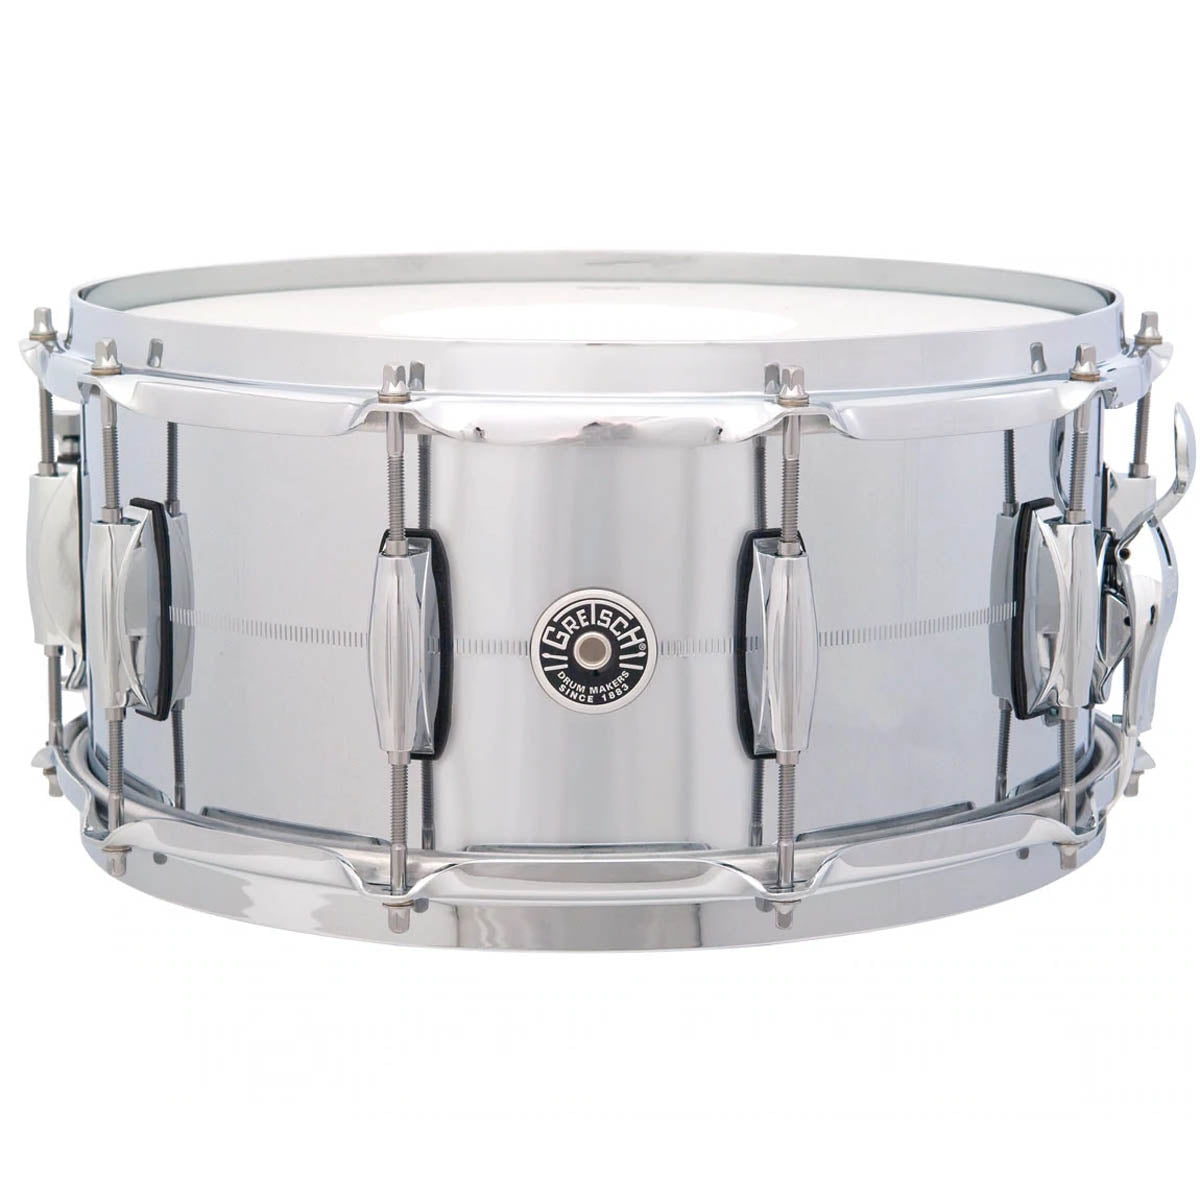 Gretsch USA Brooklyn Chrome Over Brass 14"x6.5" Snare Drum